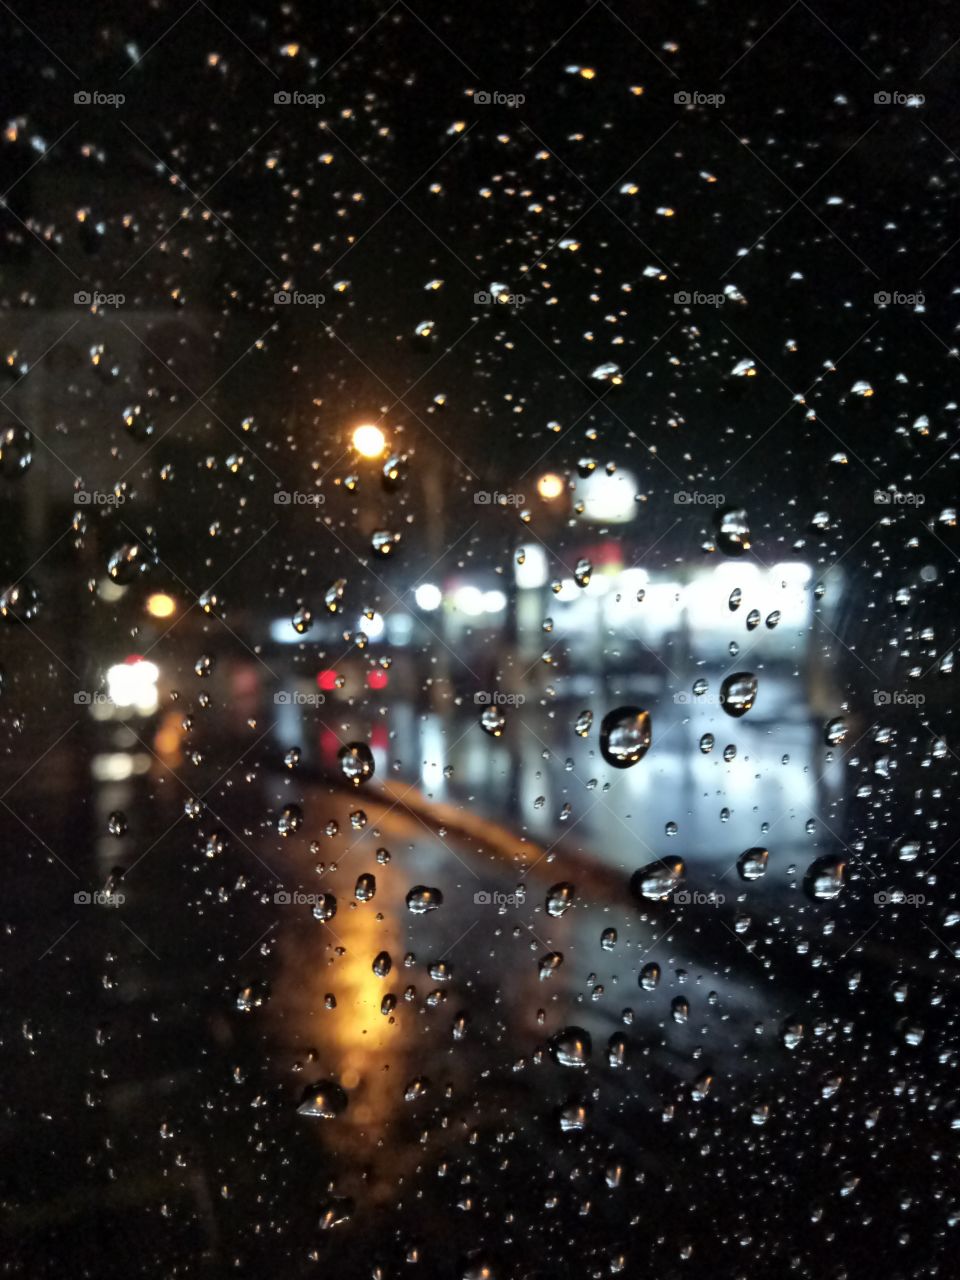 Raindrops on my window.